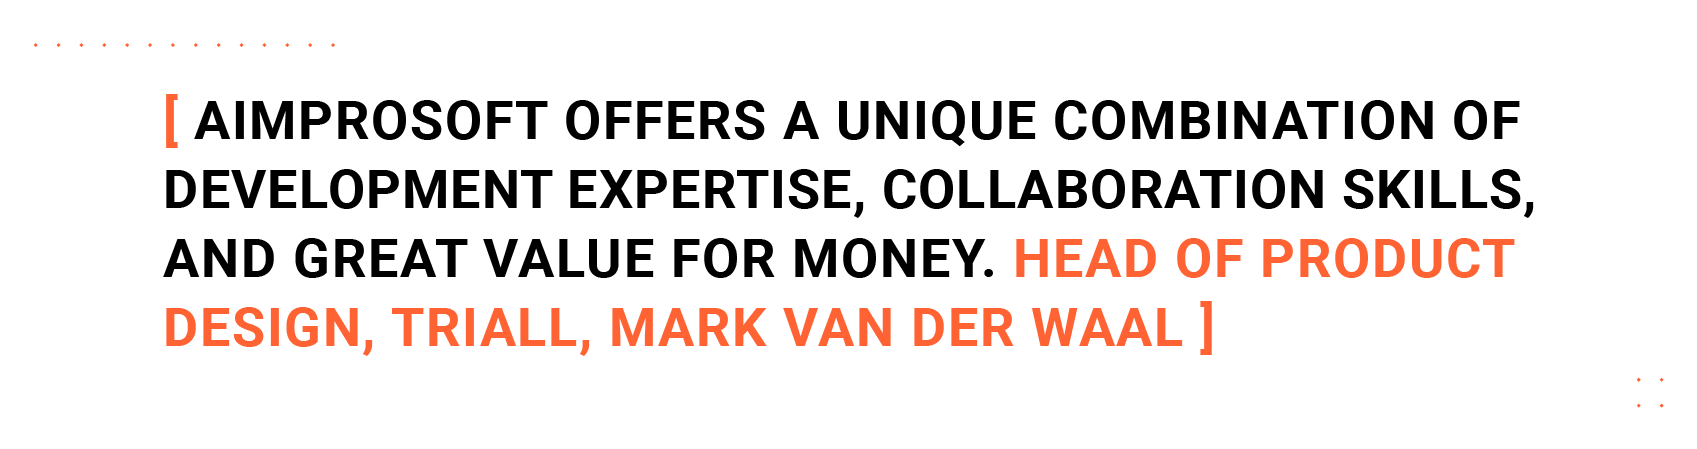 Client's feedback_Triall, Mark van der Waal